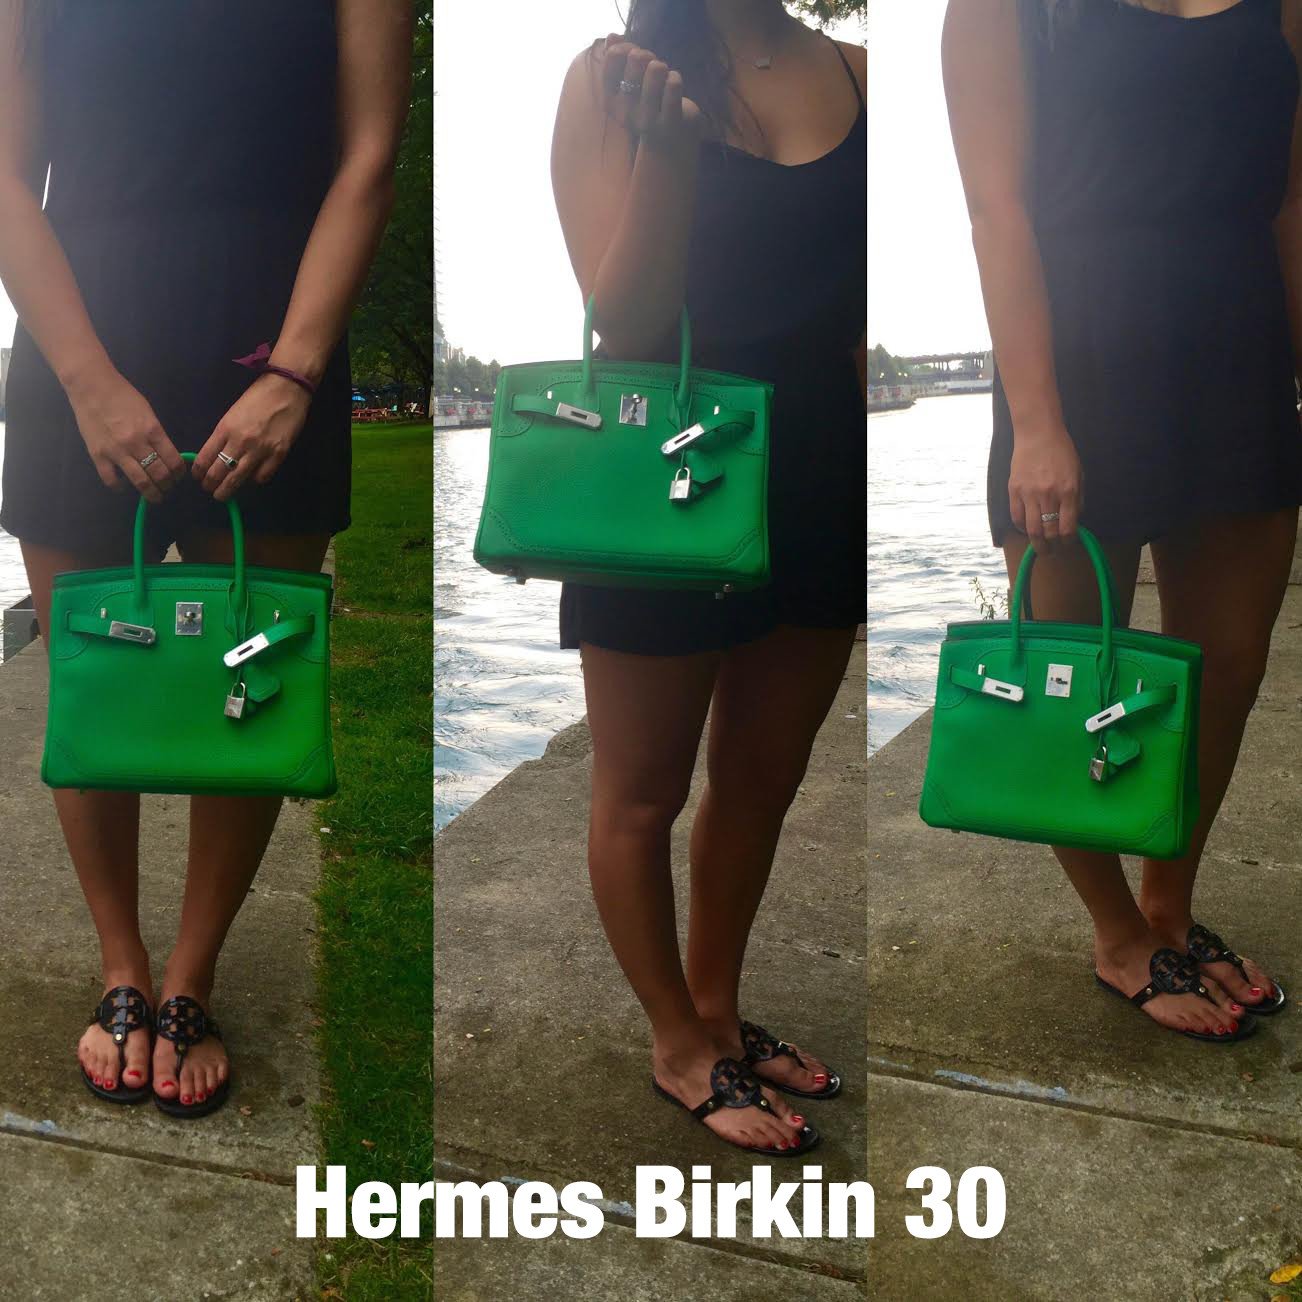 Hermes Birkin Size Comparison Guide 2023 • Petite in Paris